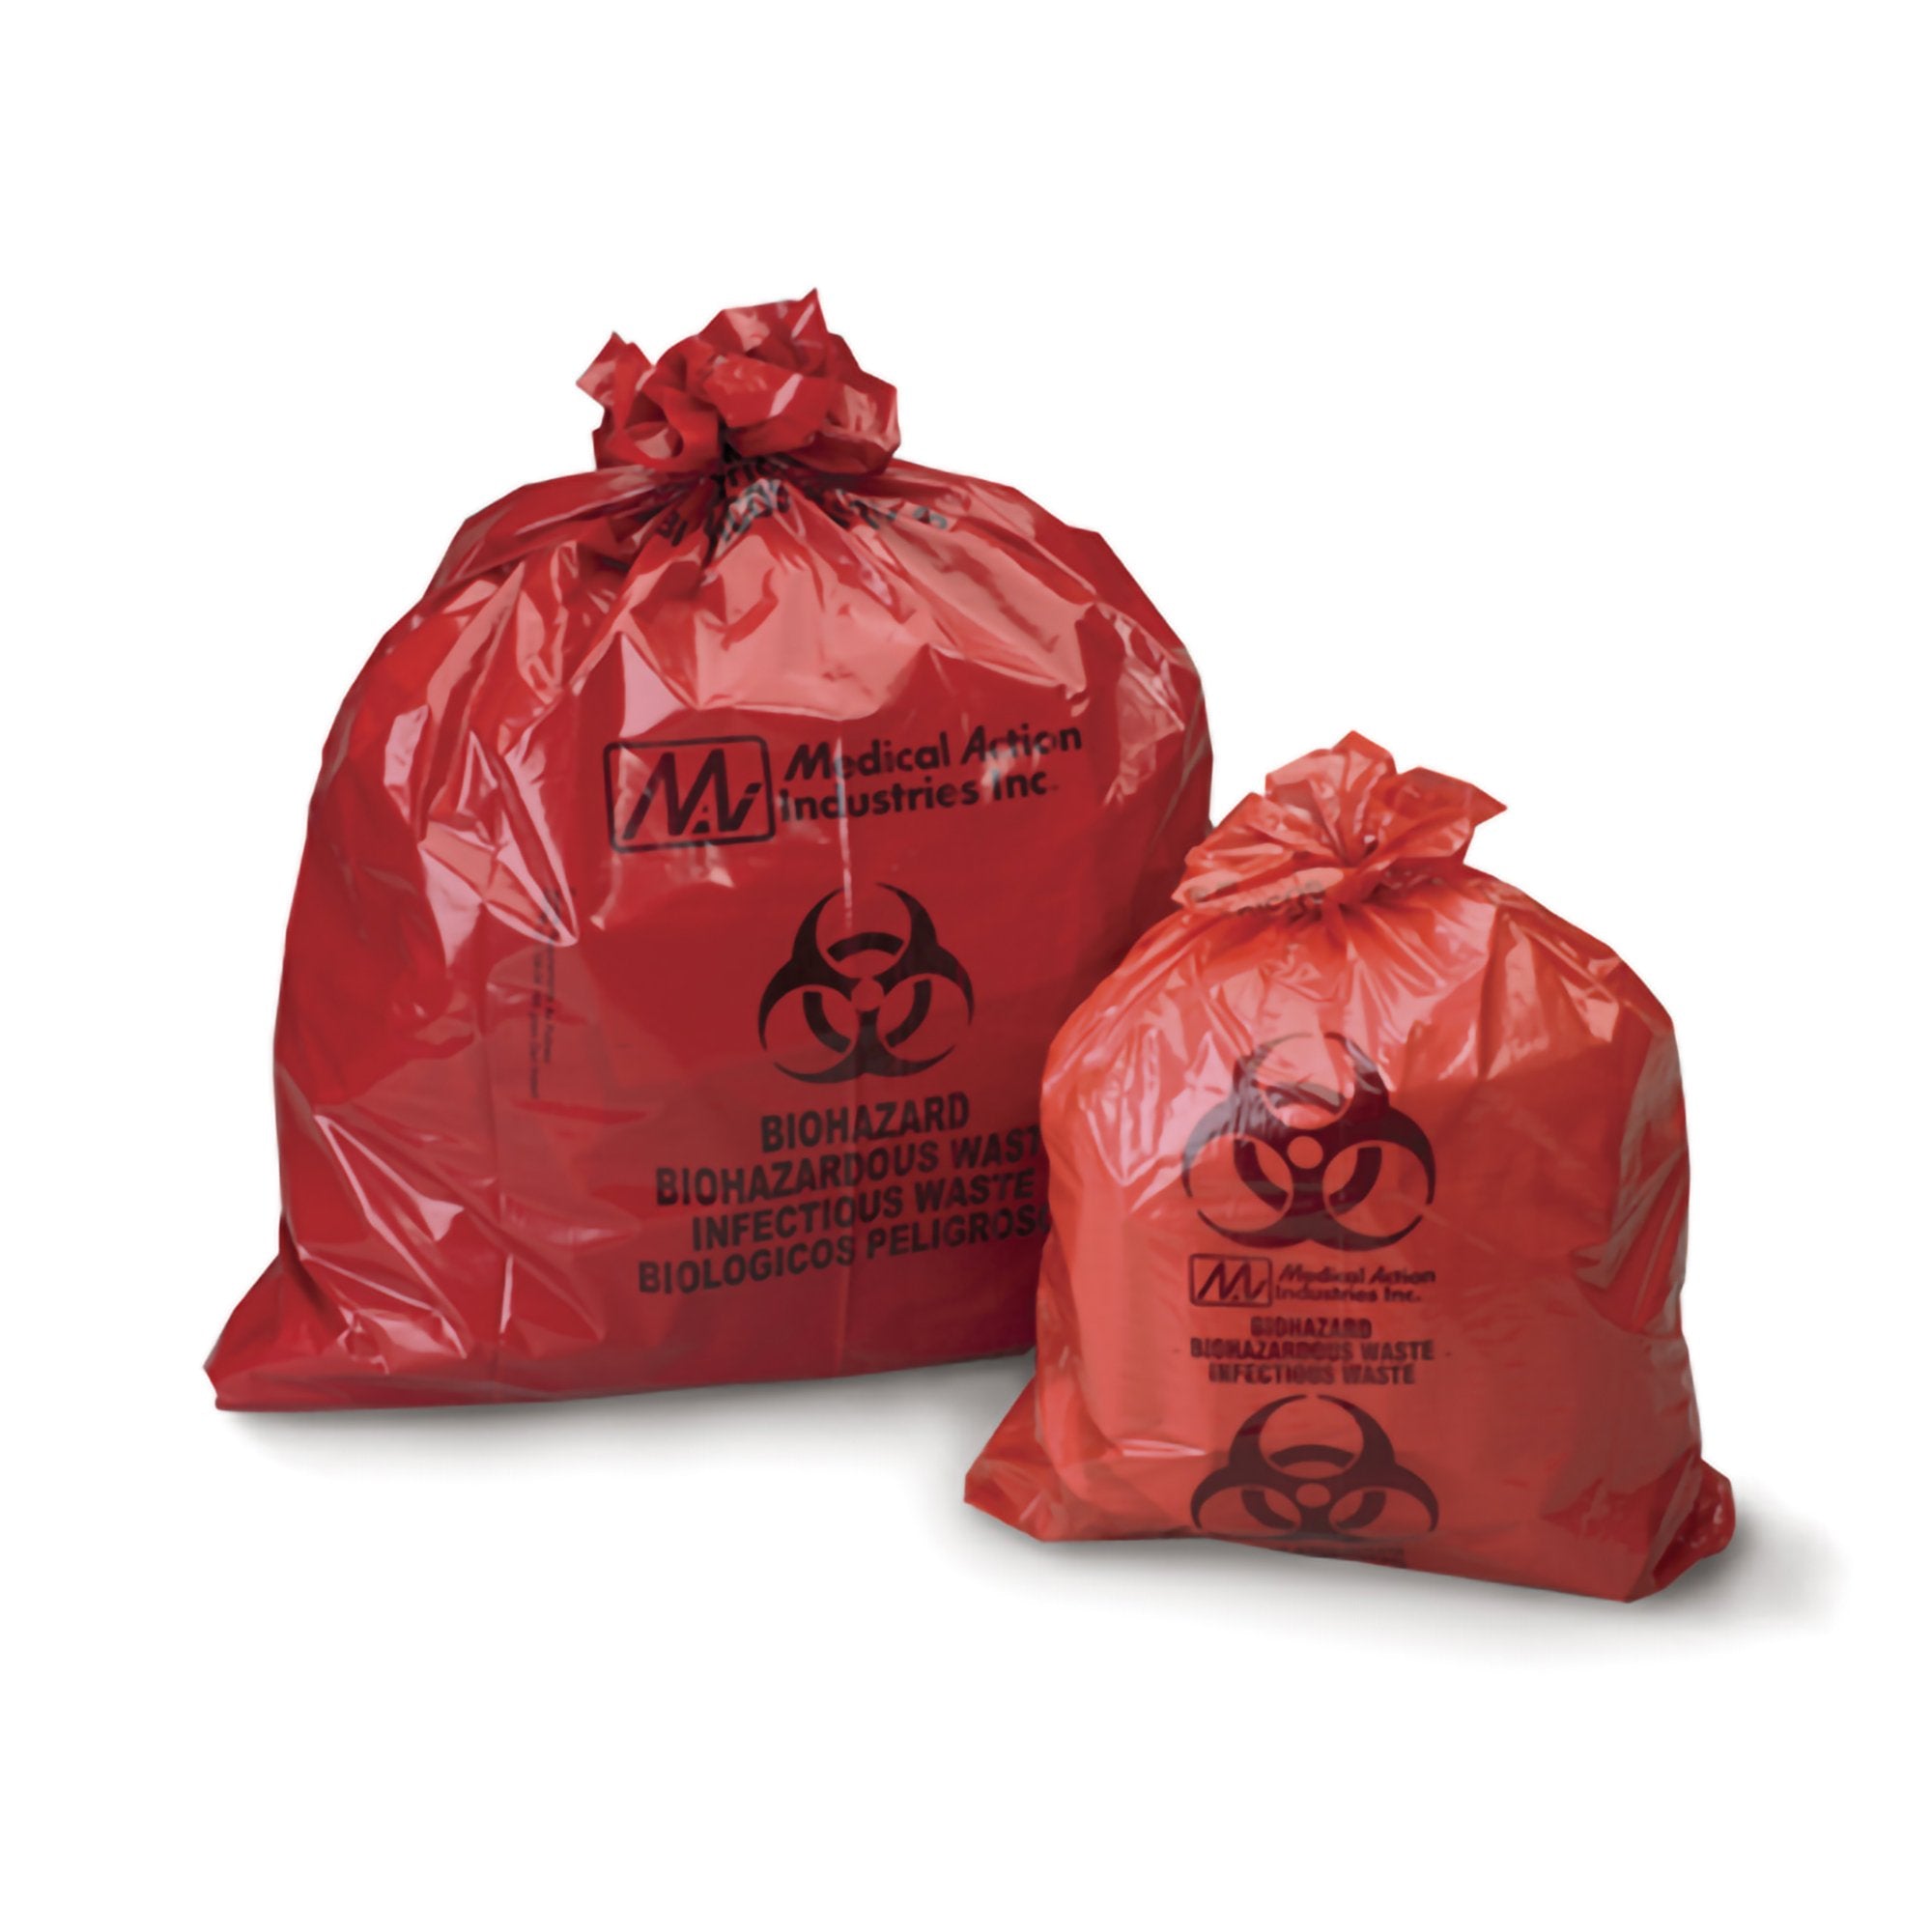 Biohazard Waste Bag Medegen Medical Products 44 gal. Red Bag Polyethylene 38 X 45 Inch